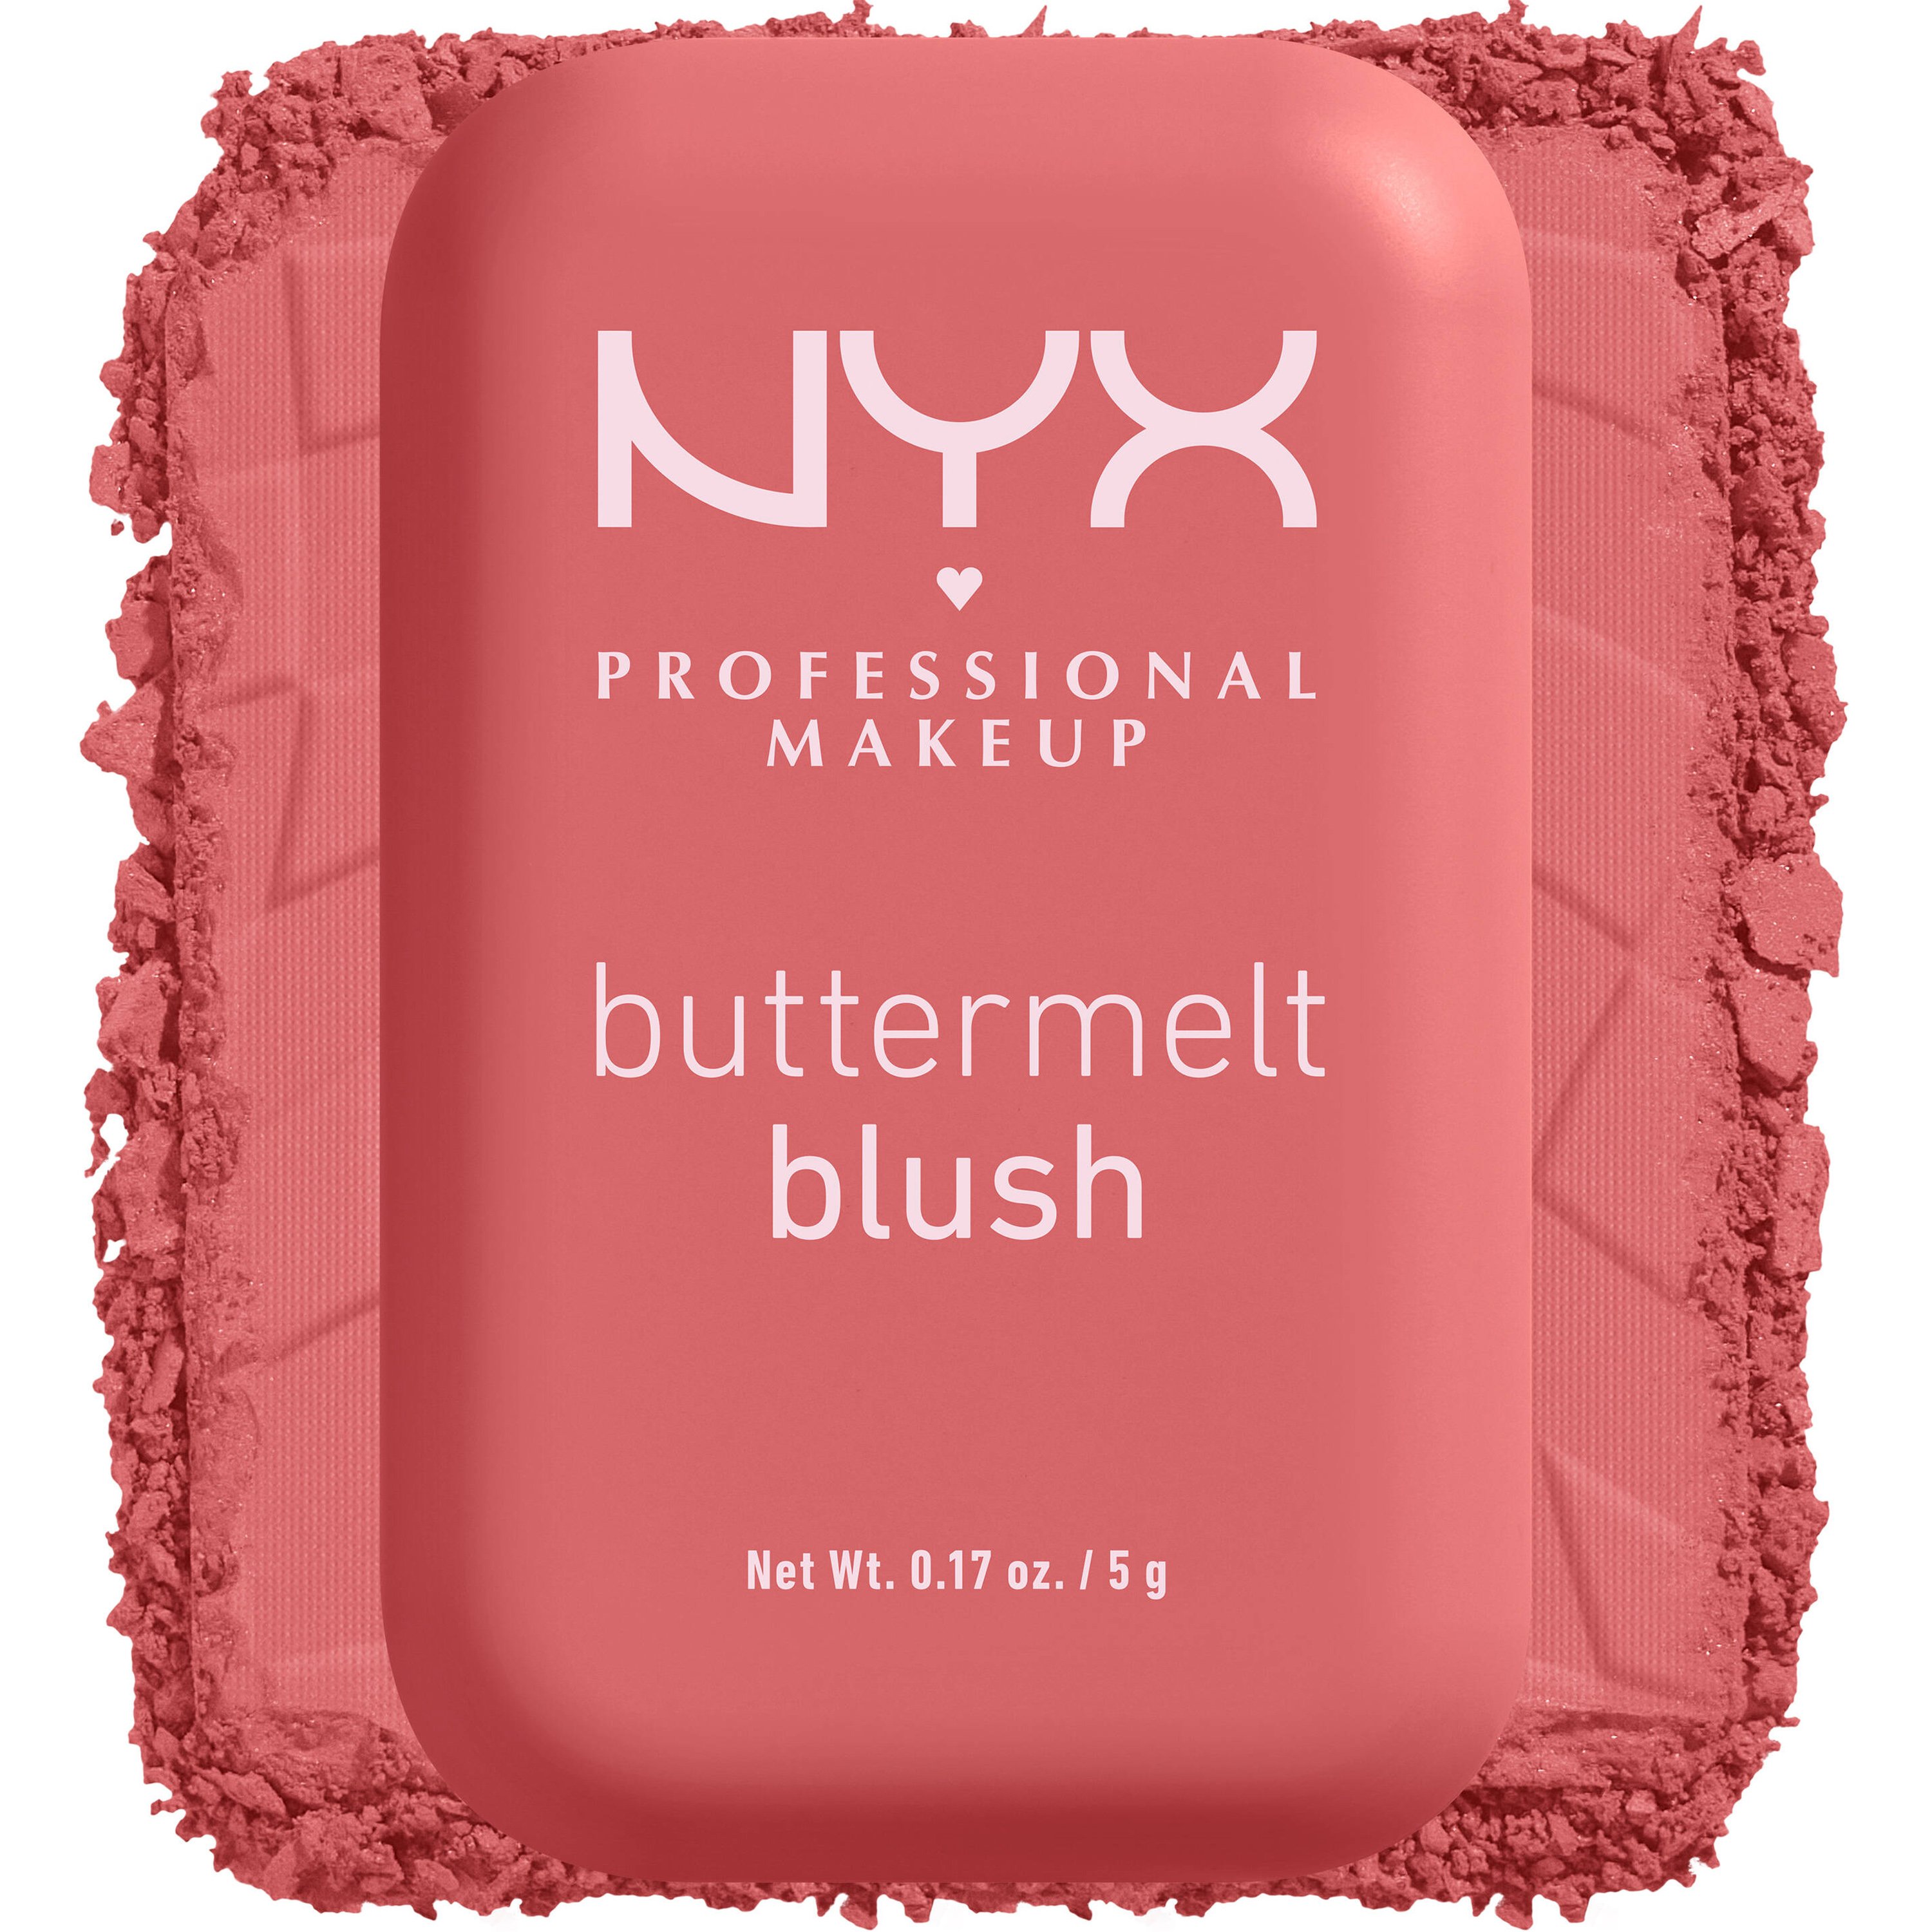 Nyx Professional Makeup Buttermelt Blush Ρουζ με Έντονο Χρώμα & Λαμπερό Τελείωμα, Shimmering Terracotta 5g - Feeling Butta